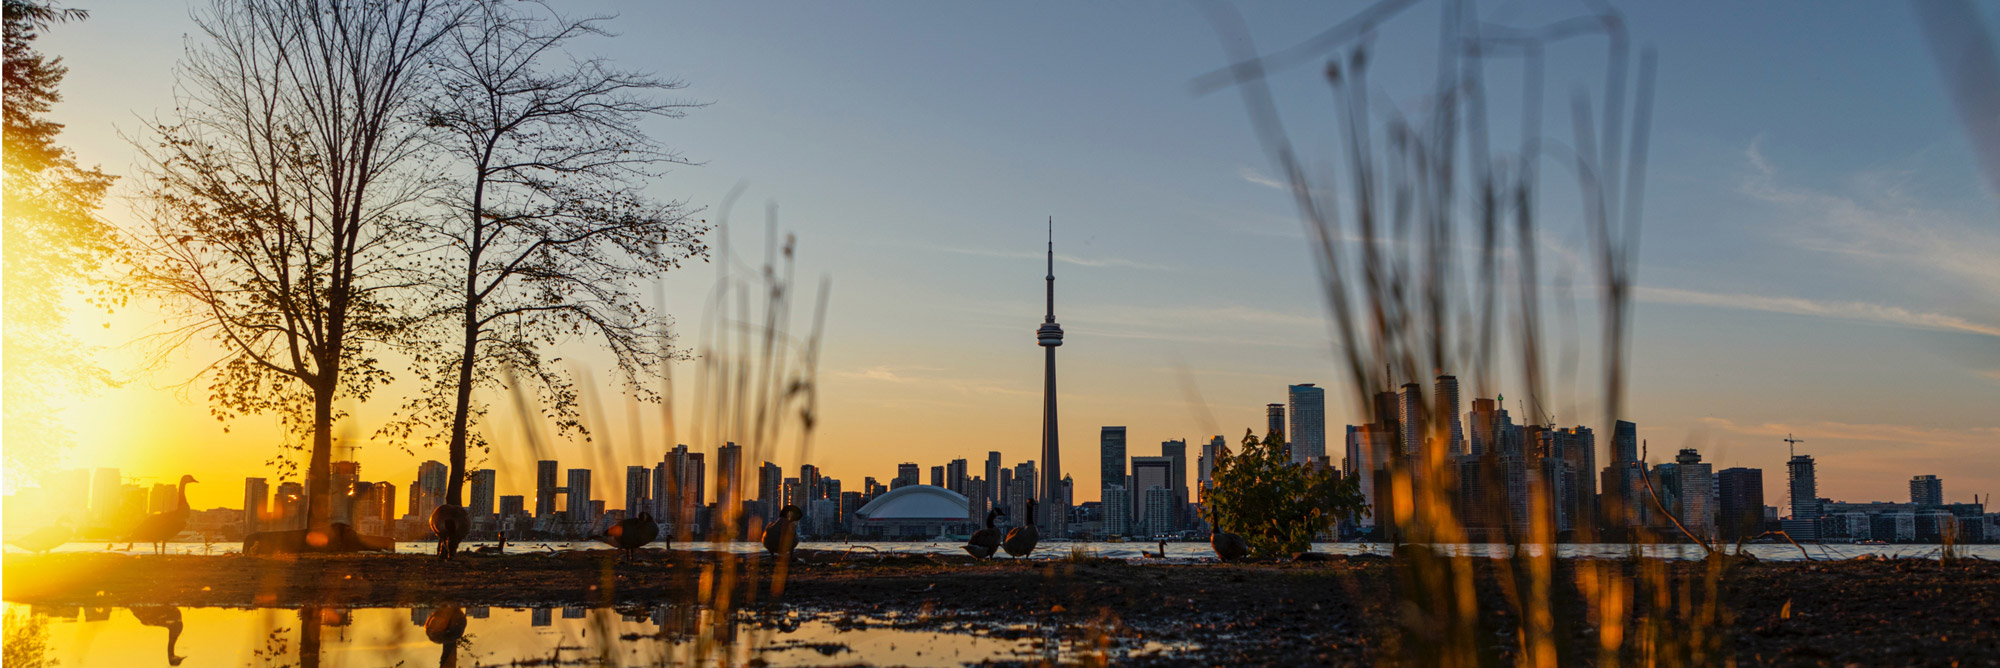 Urban biodiversity of Toronto skyline with vegetation in forefront.